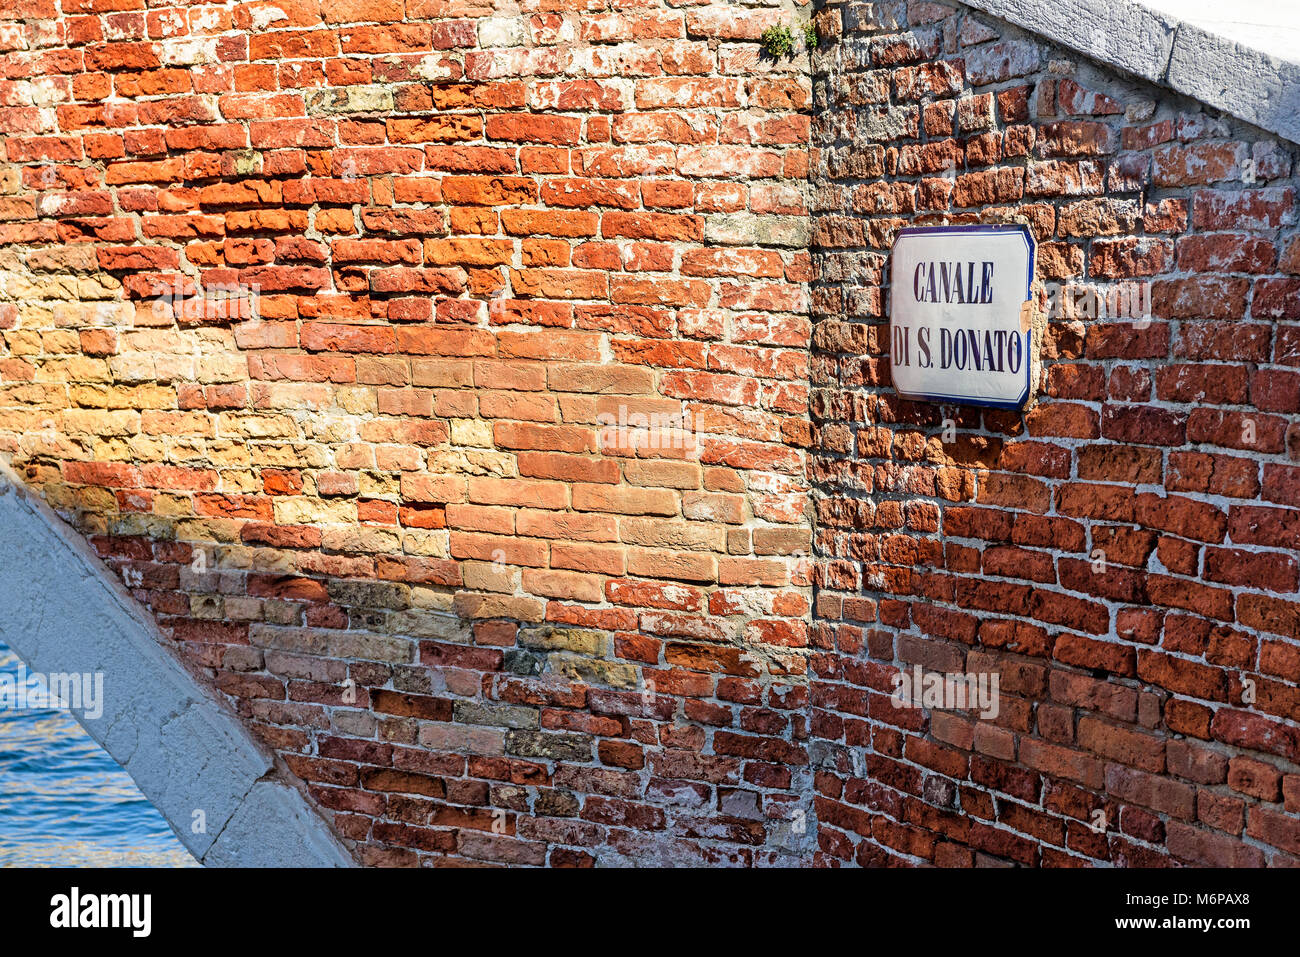 Canale di San Donato road name sign on red brick wall, Murano island, Venice, Italy Stock Photo